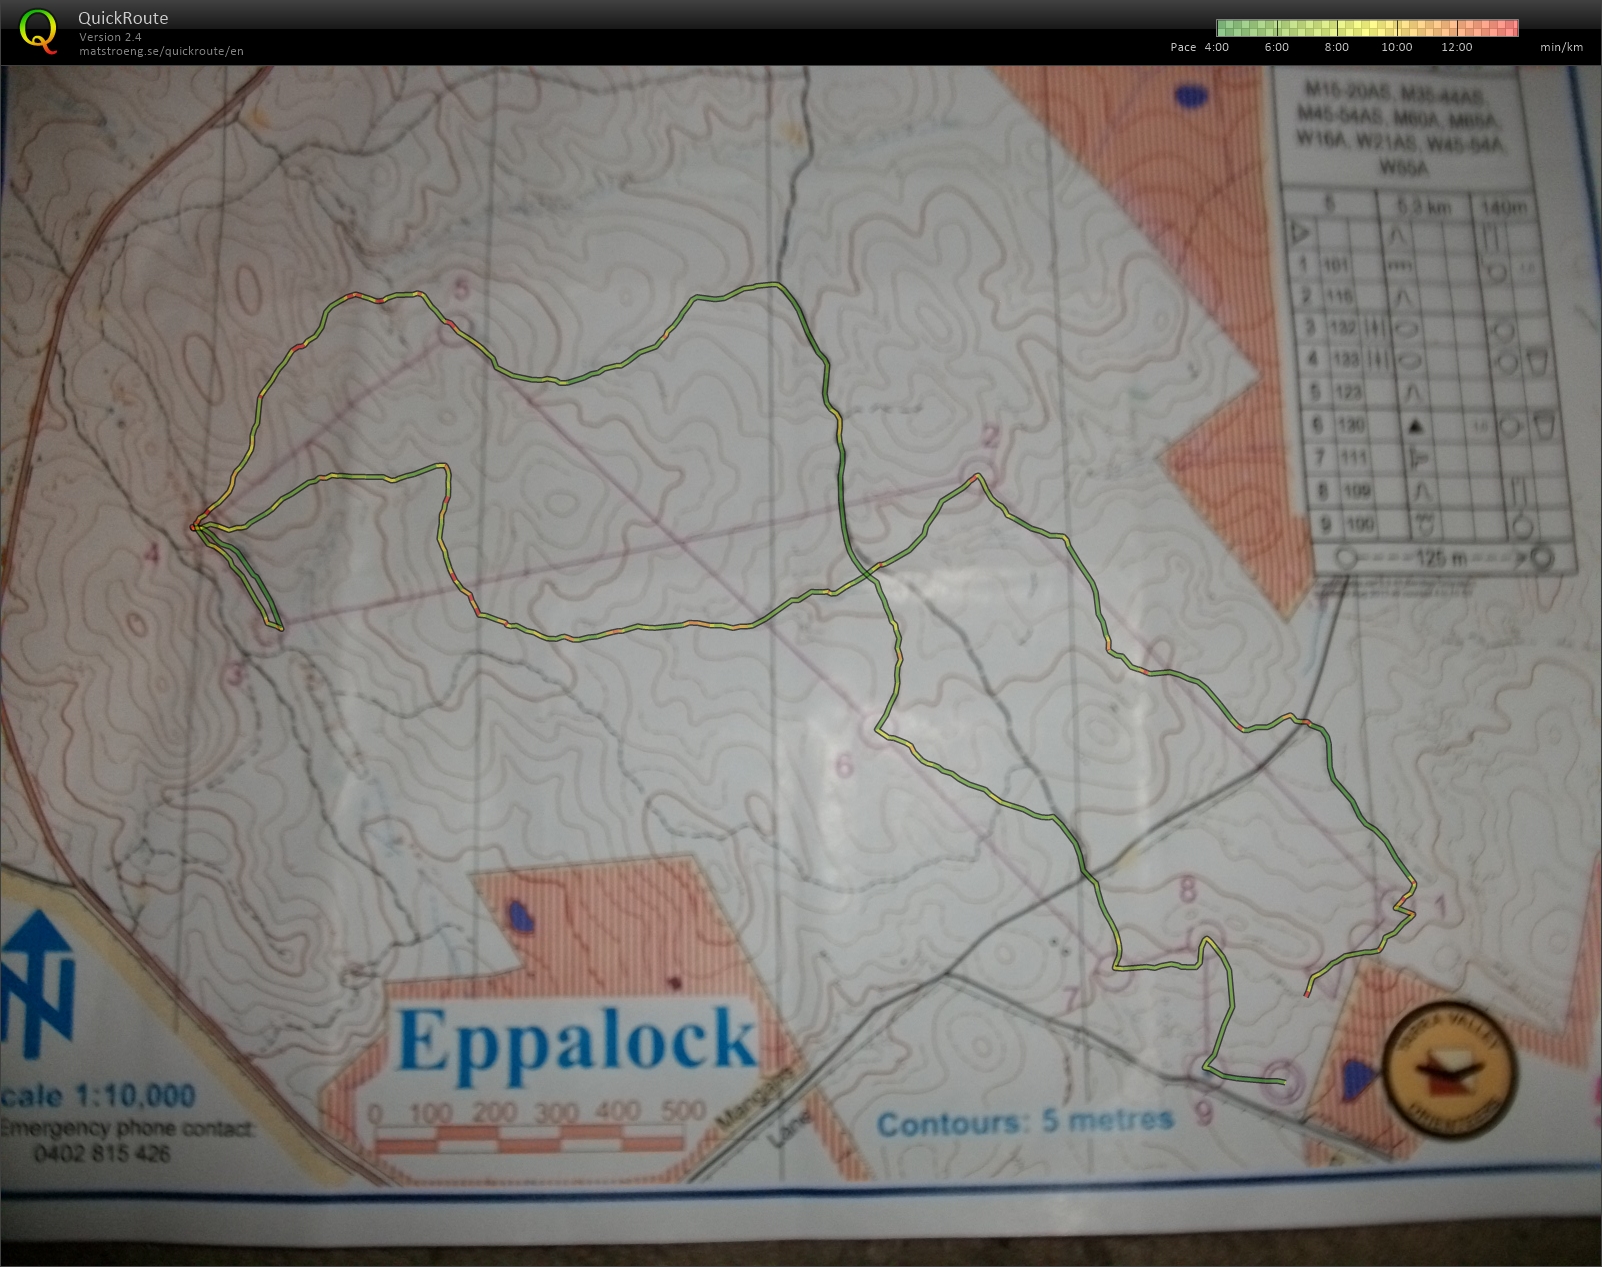 State Series #7 Eppalock (17.08.2013)